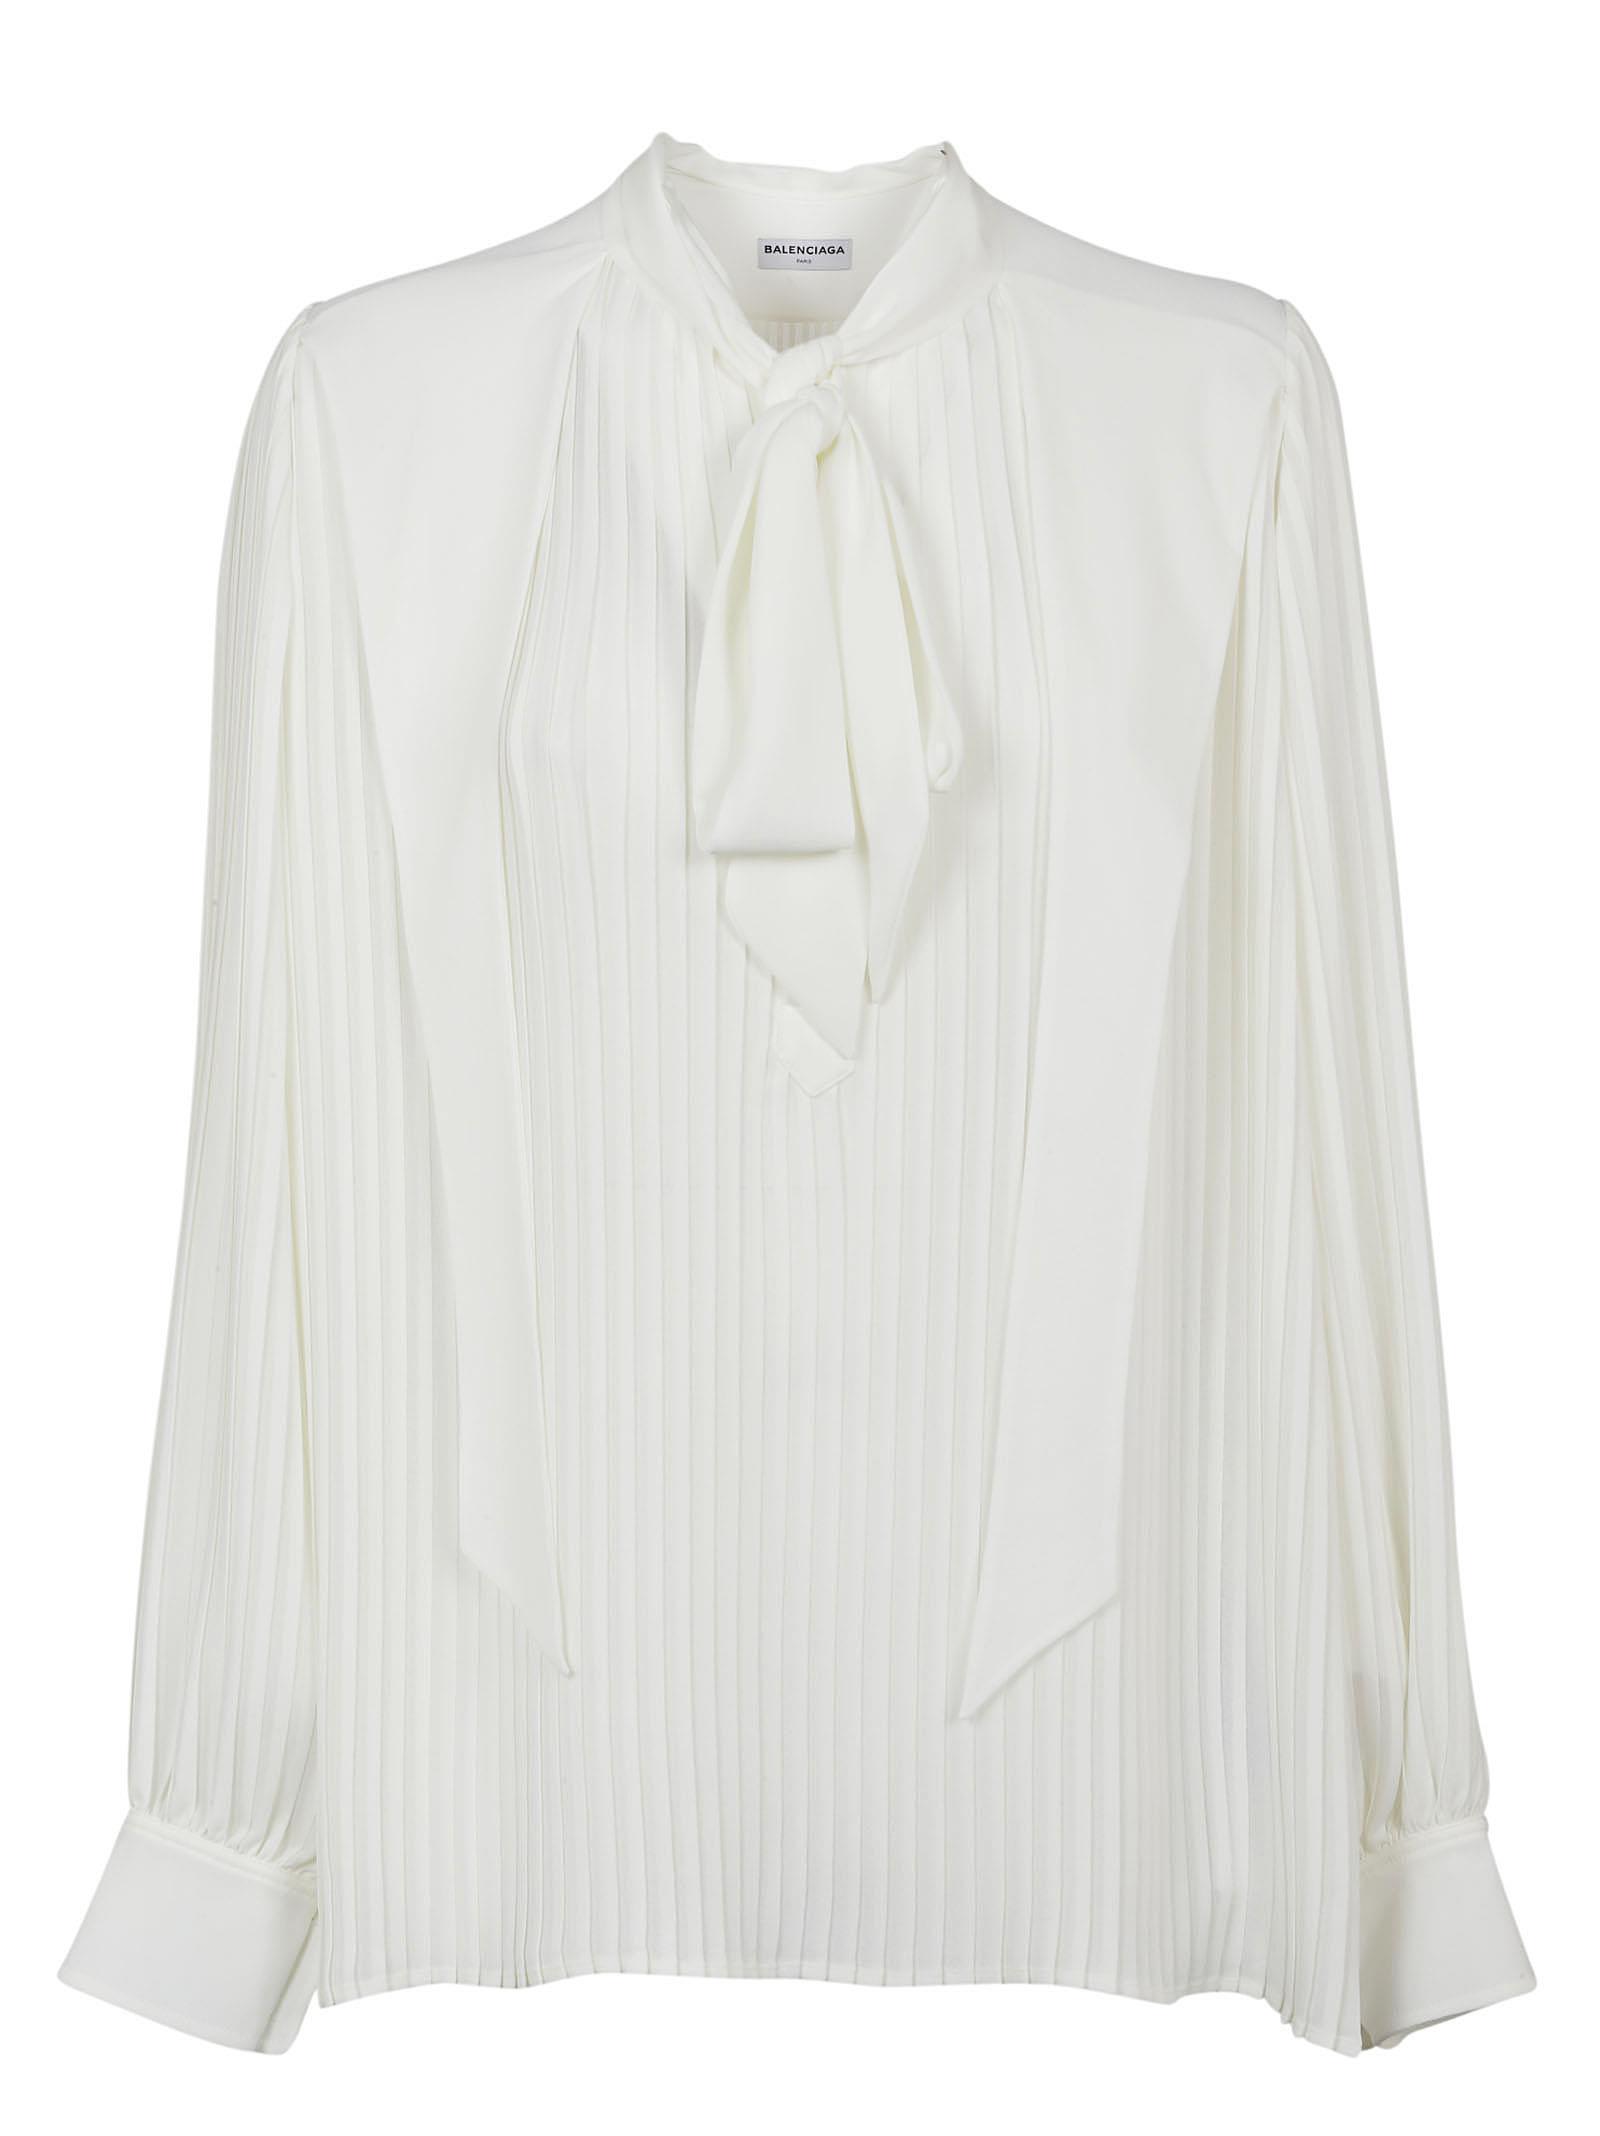 balenciaga white blouse